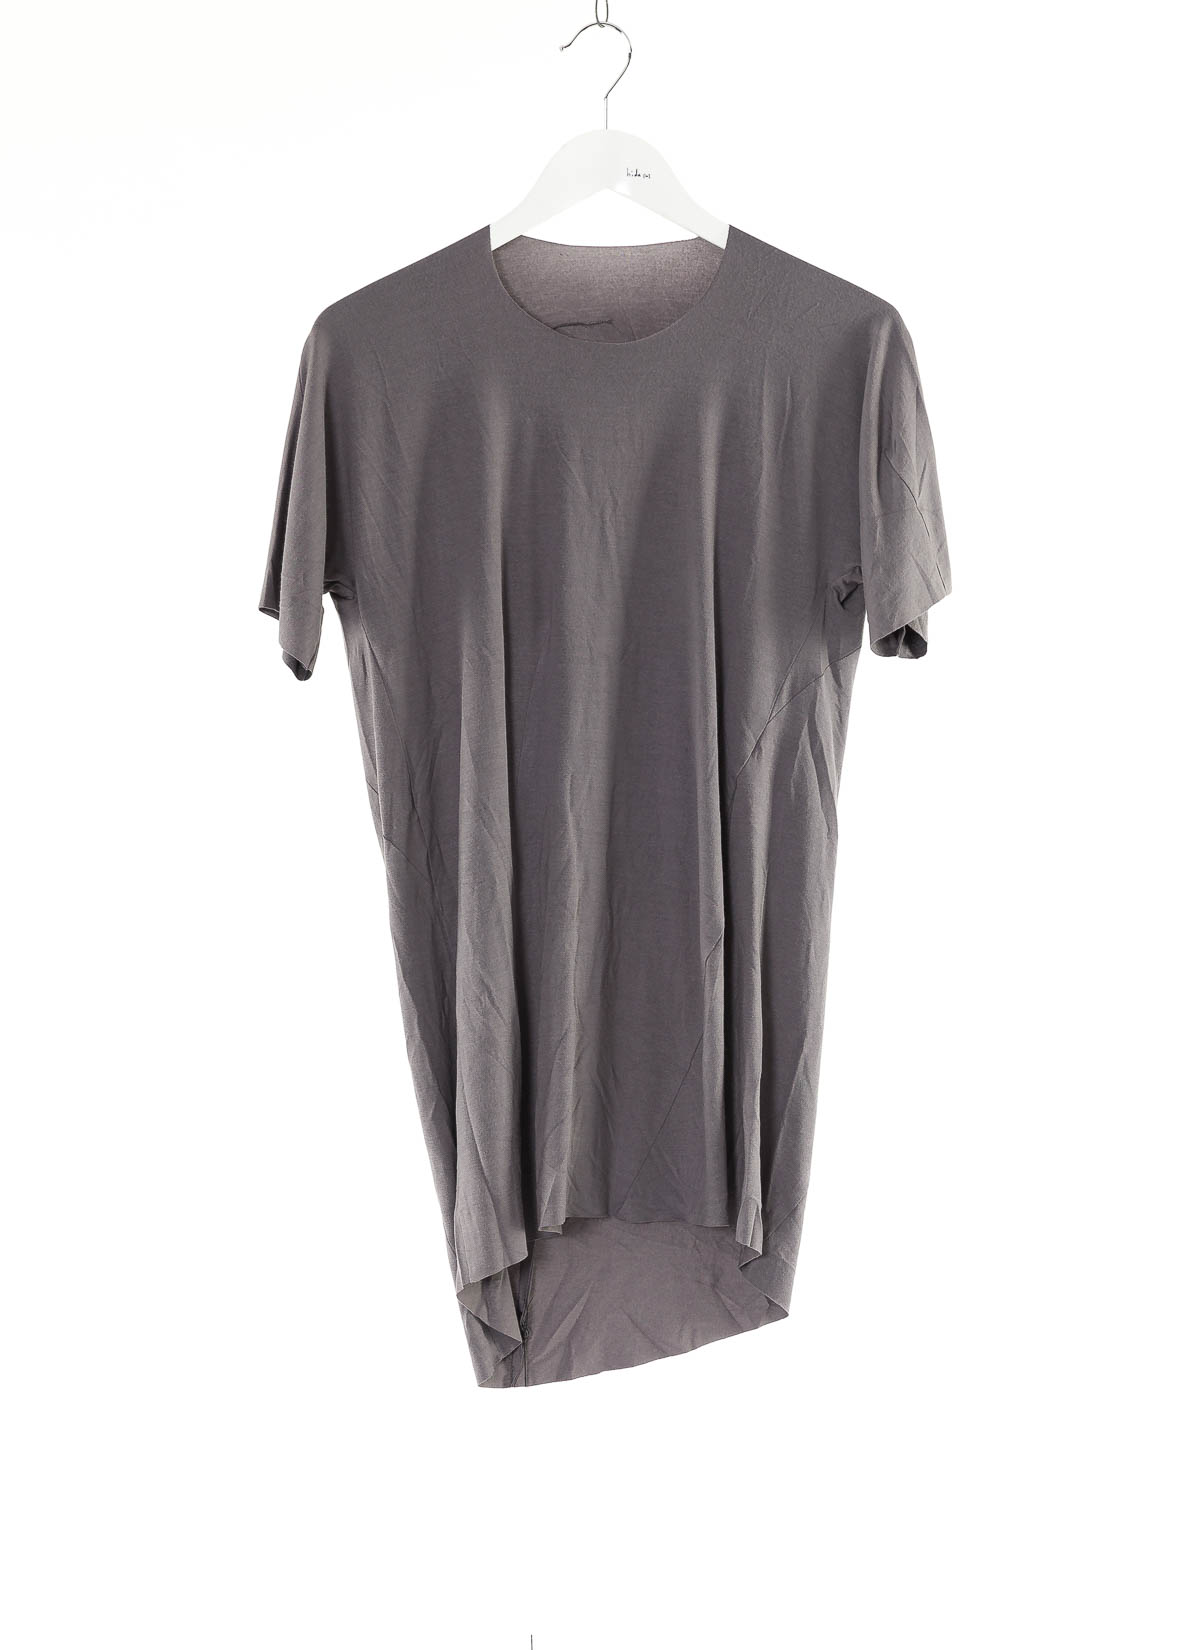 hide-m | LEON EMANUEL BLANCK Distortion GS T-Shirt, grey